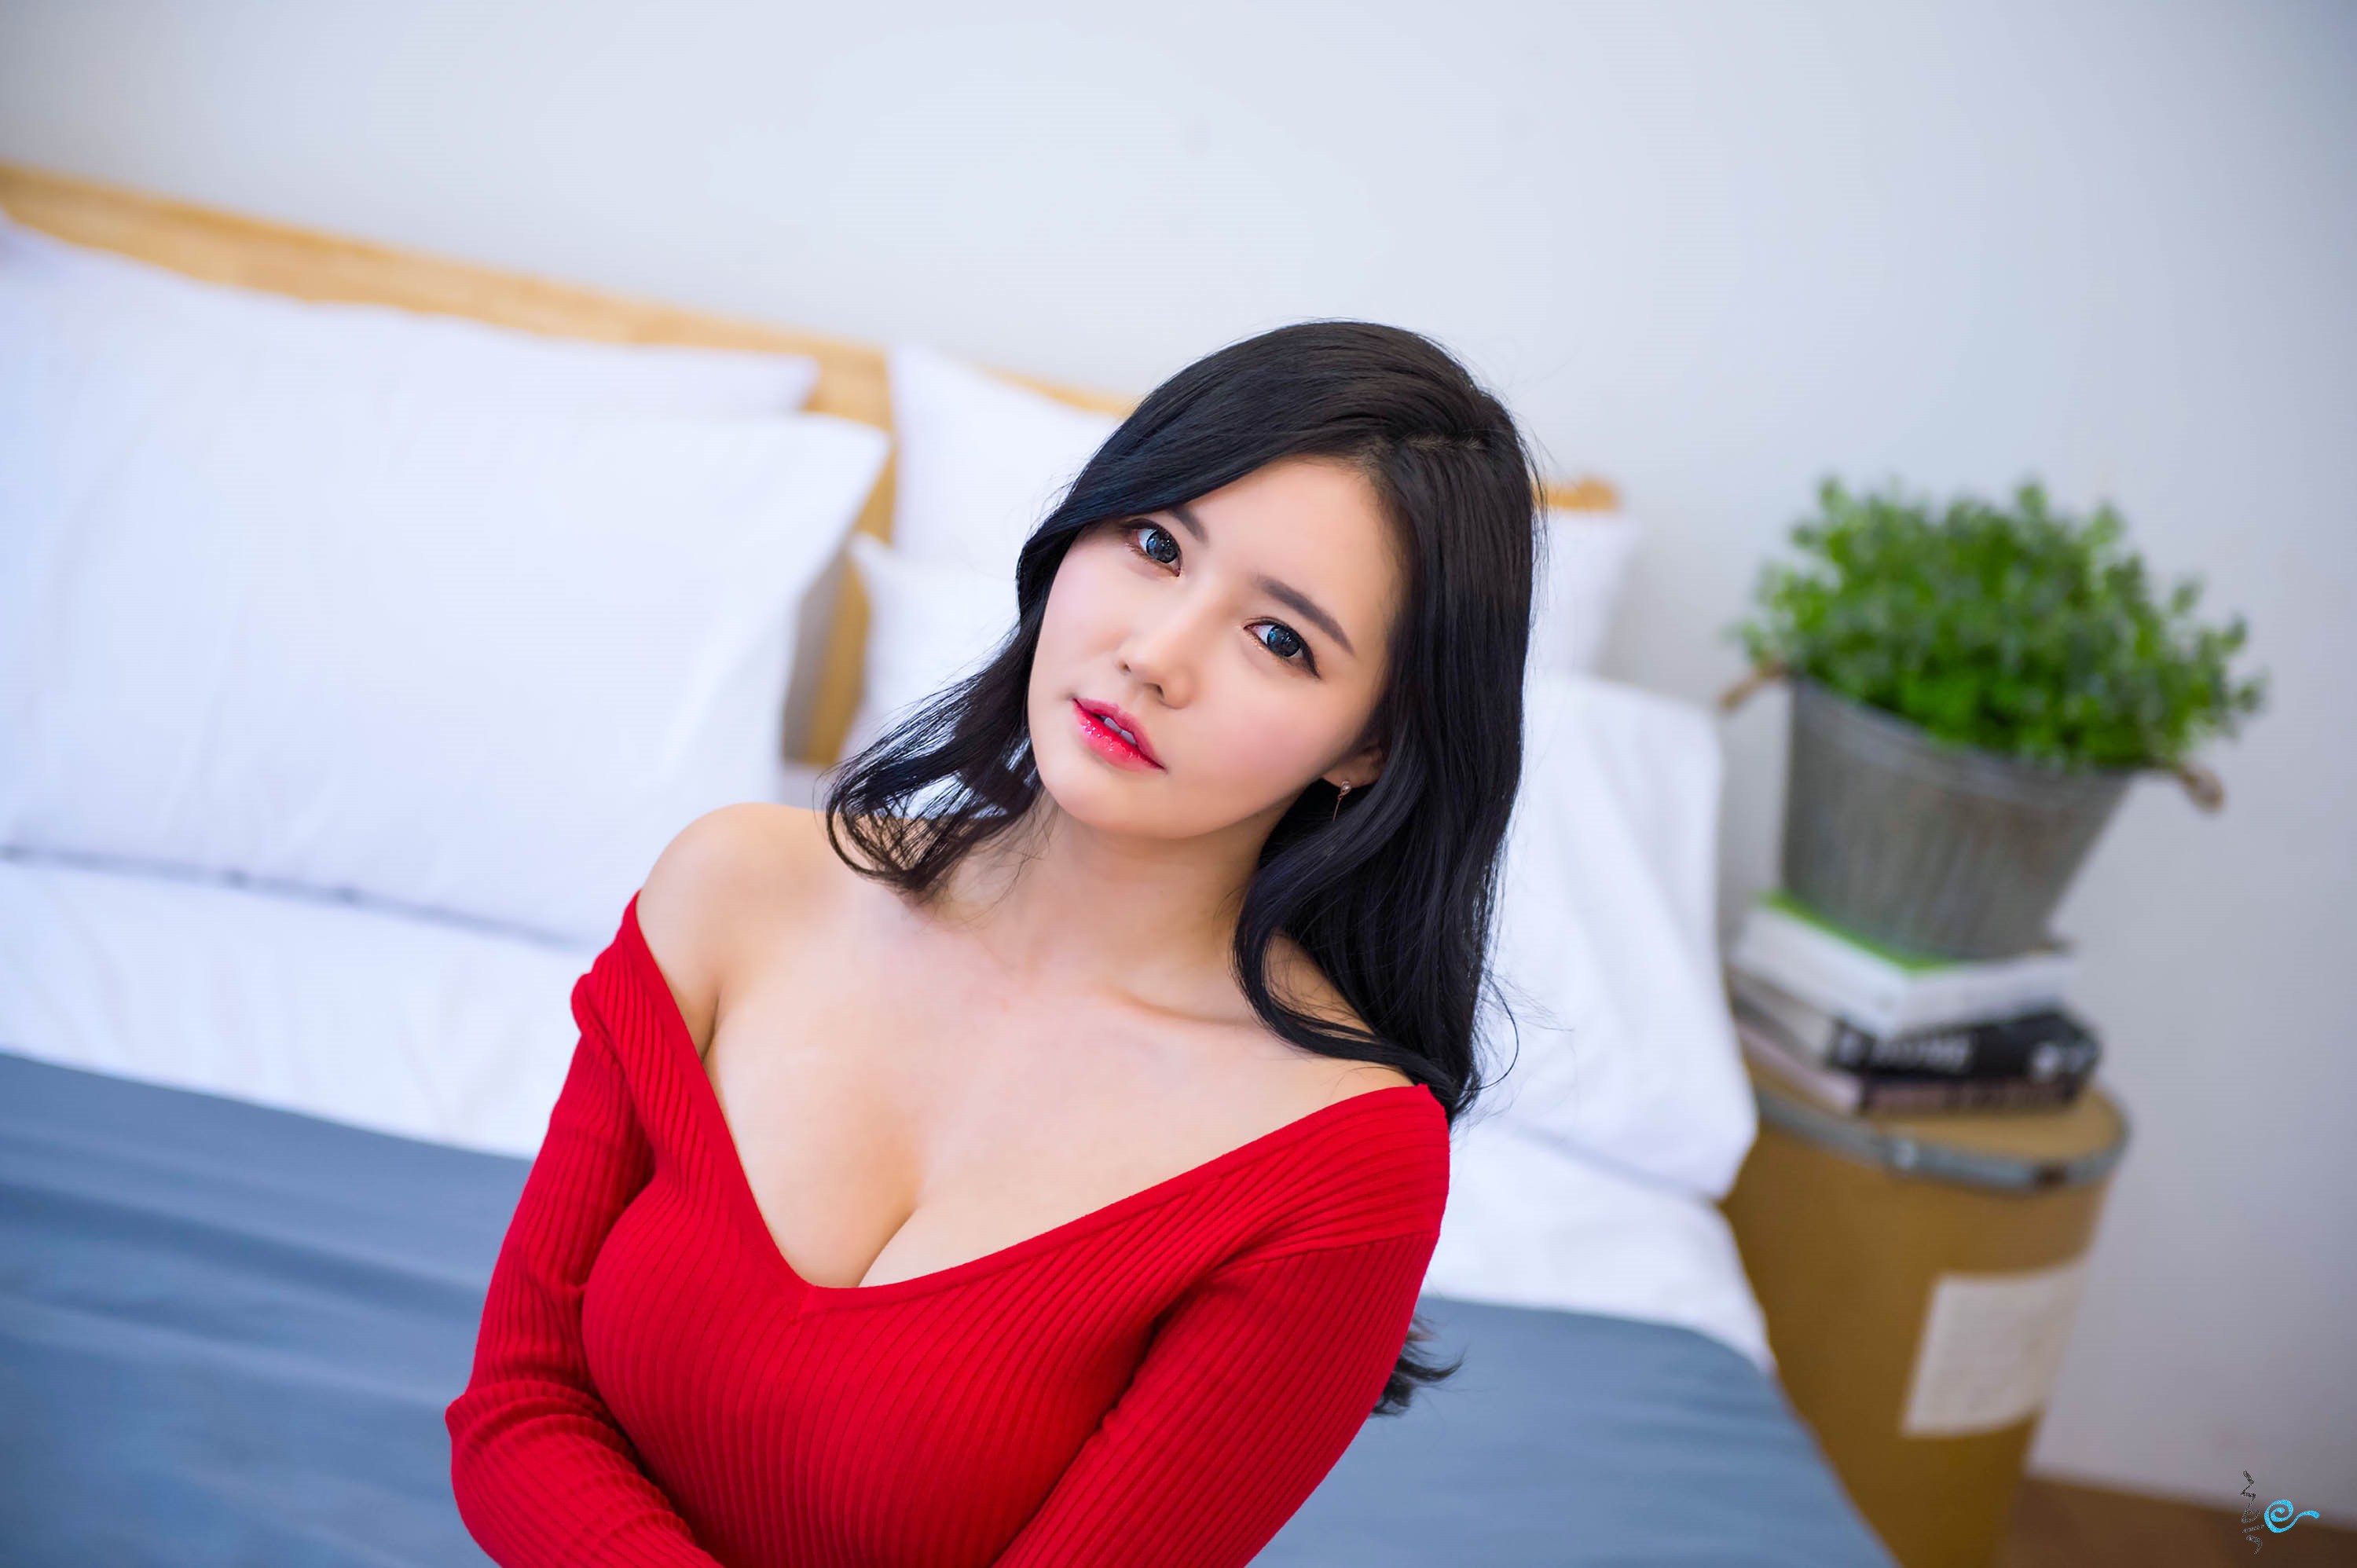 Han Ga Eun Red Dress V Neck Asian Bedroom Women Portrait Plants Dark Hair Model Bare Shoulders Bed F 3000x1996